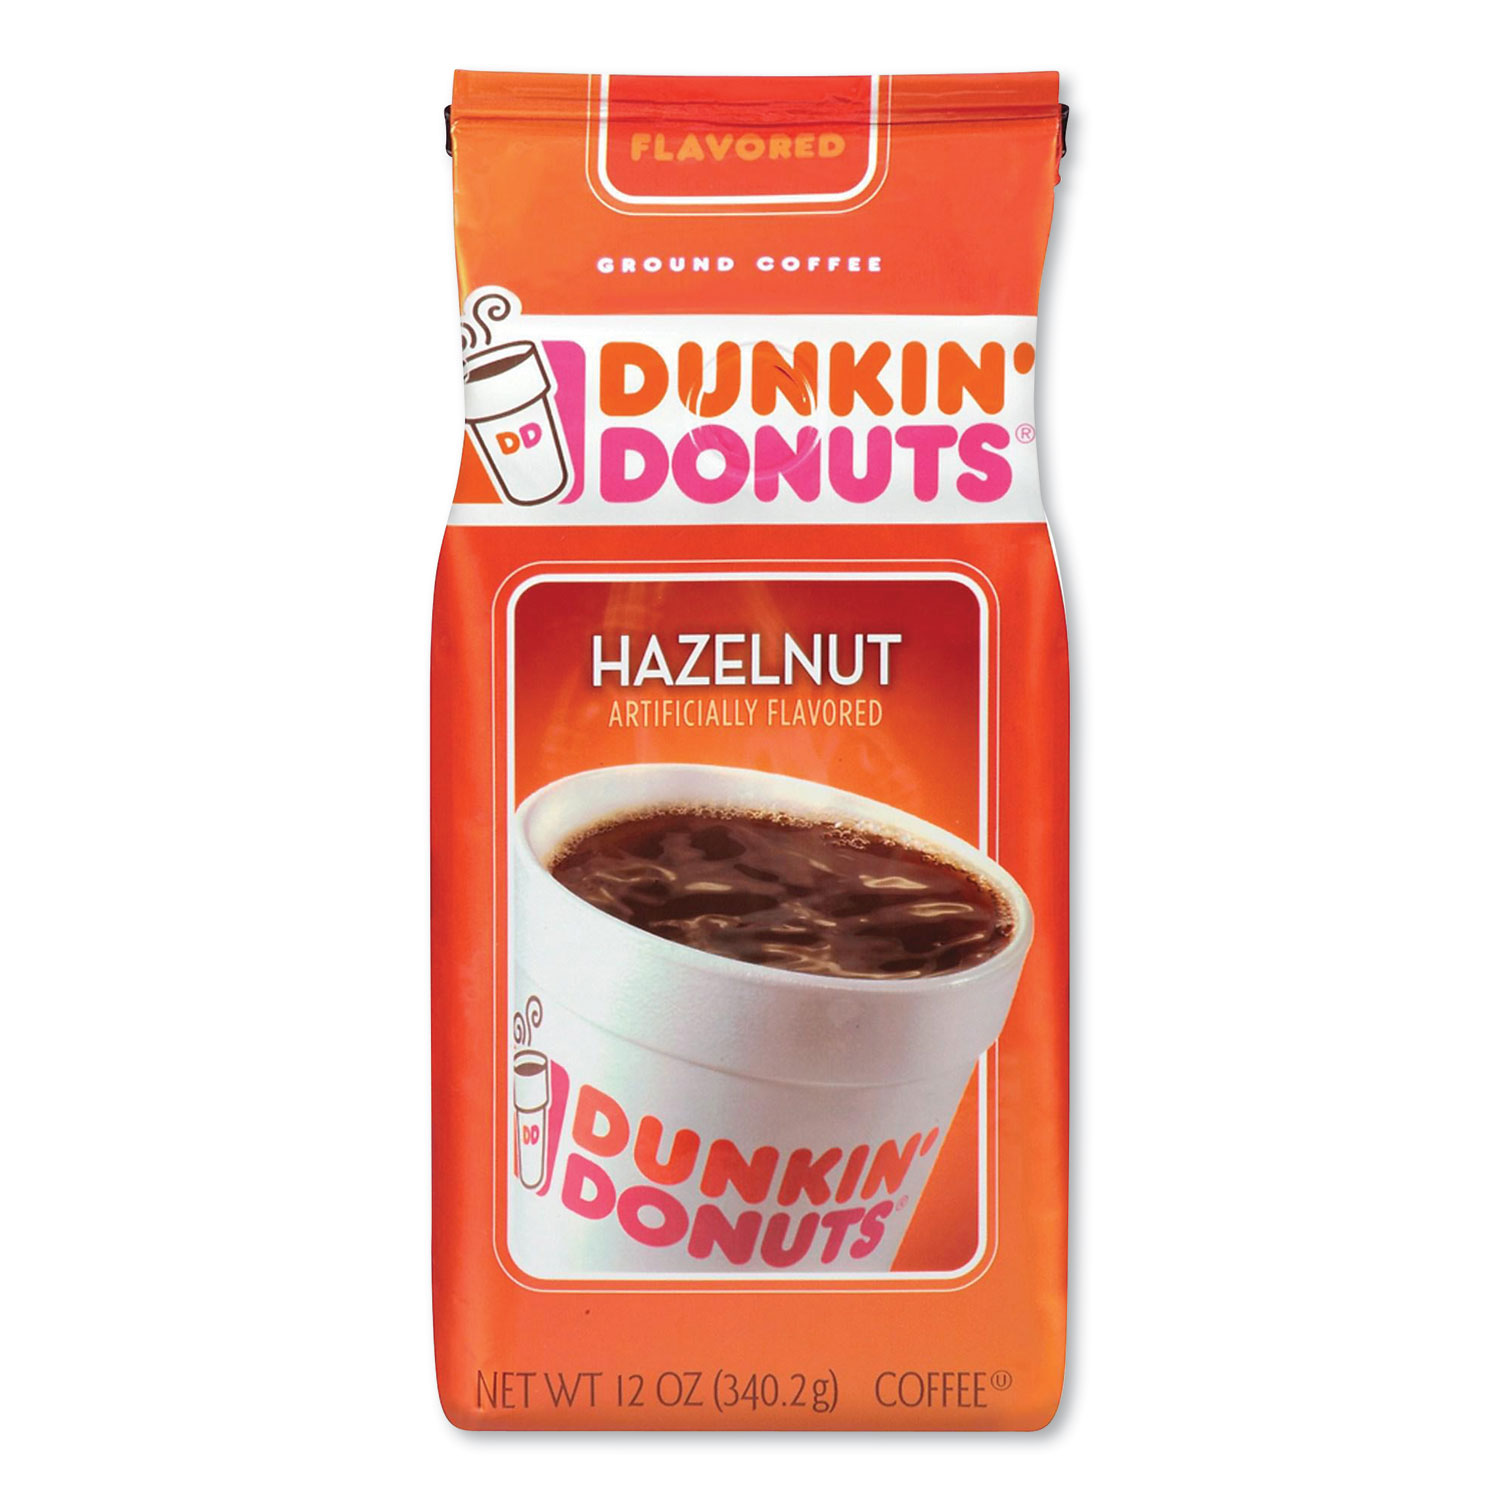 Dunkin Donuts® Original Blend Coffee, Hazelnut, 12 oz Bag